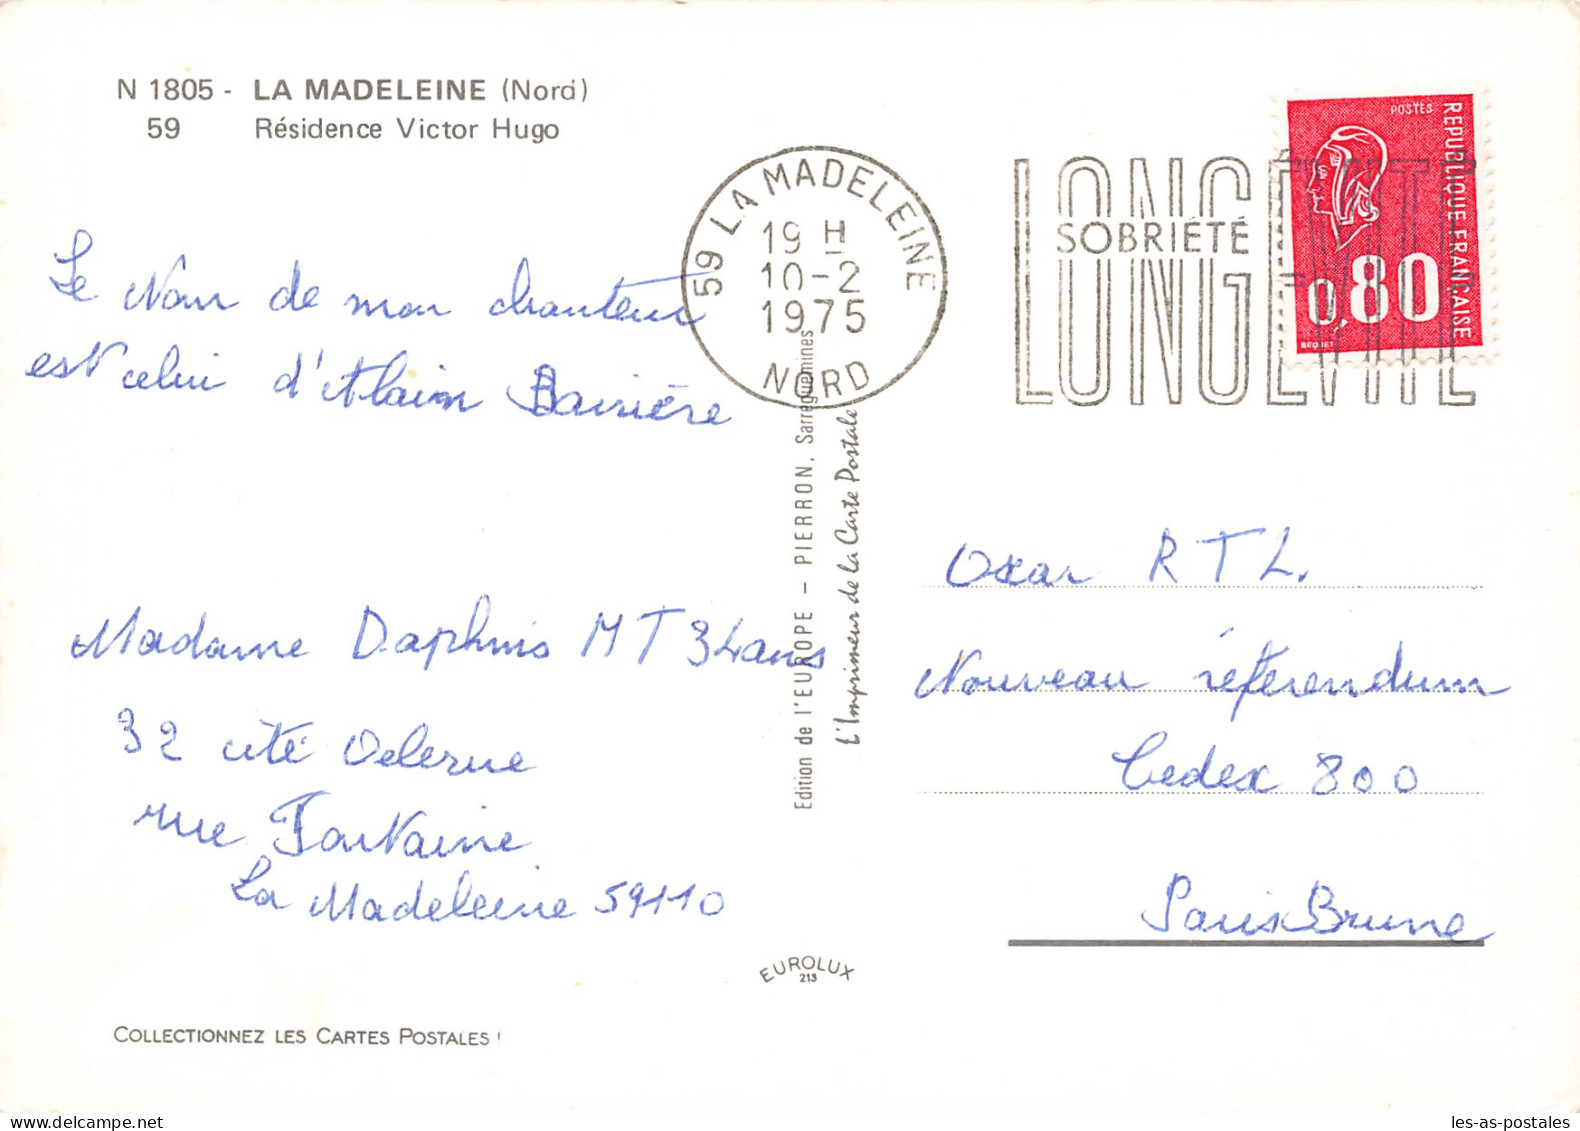 59 LA MADELEINE RESIDENCE VICTOR HUGO - La Madeleine